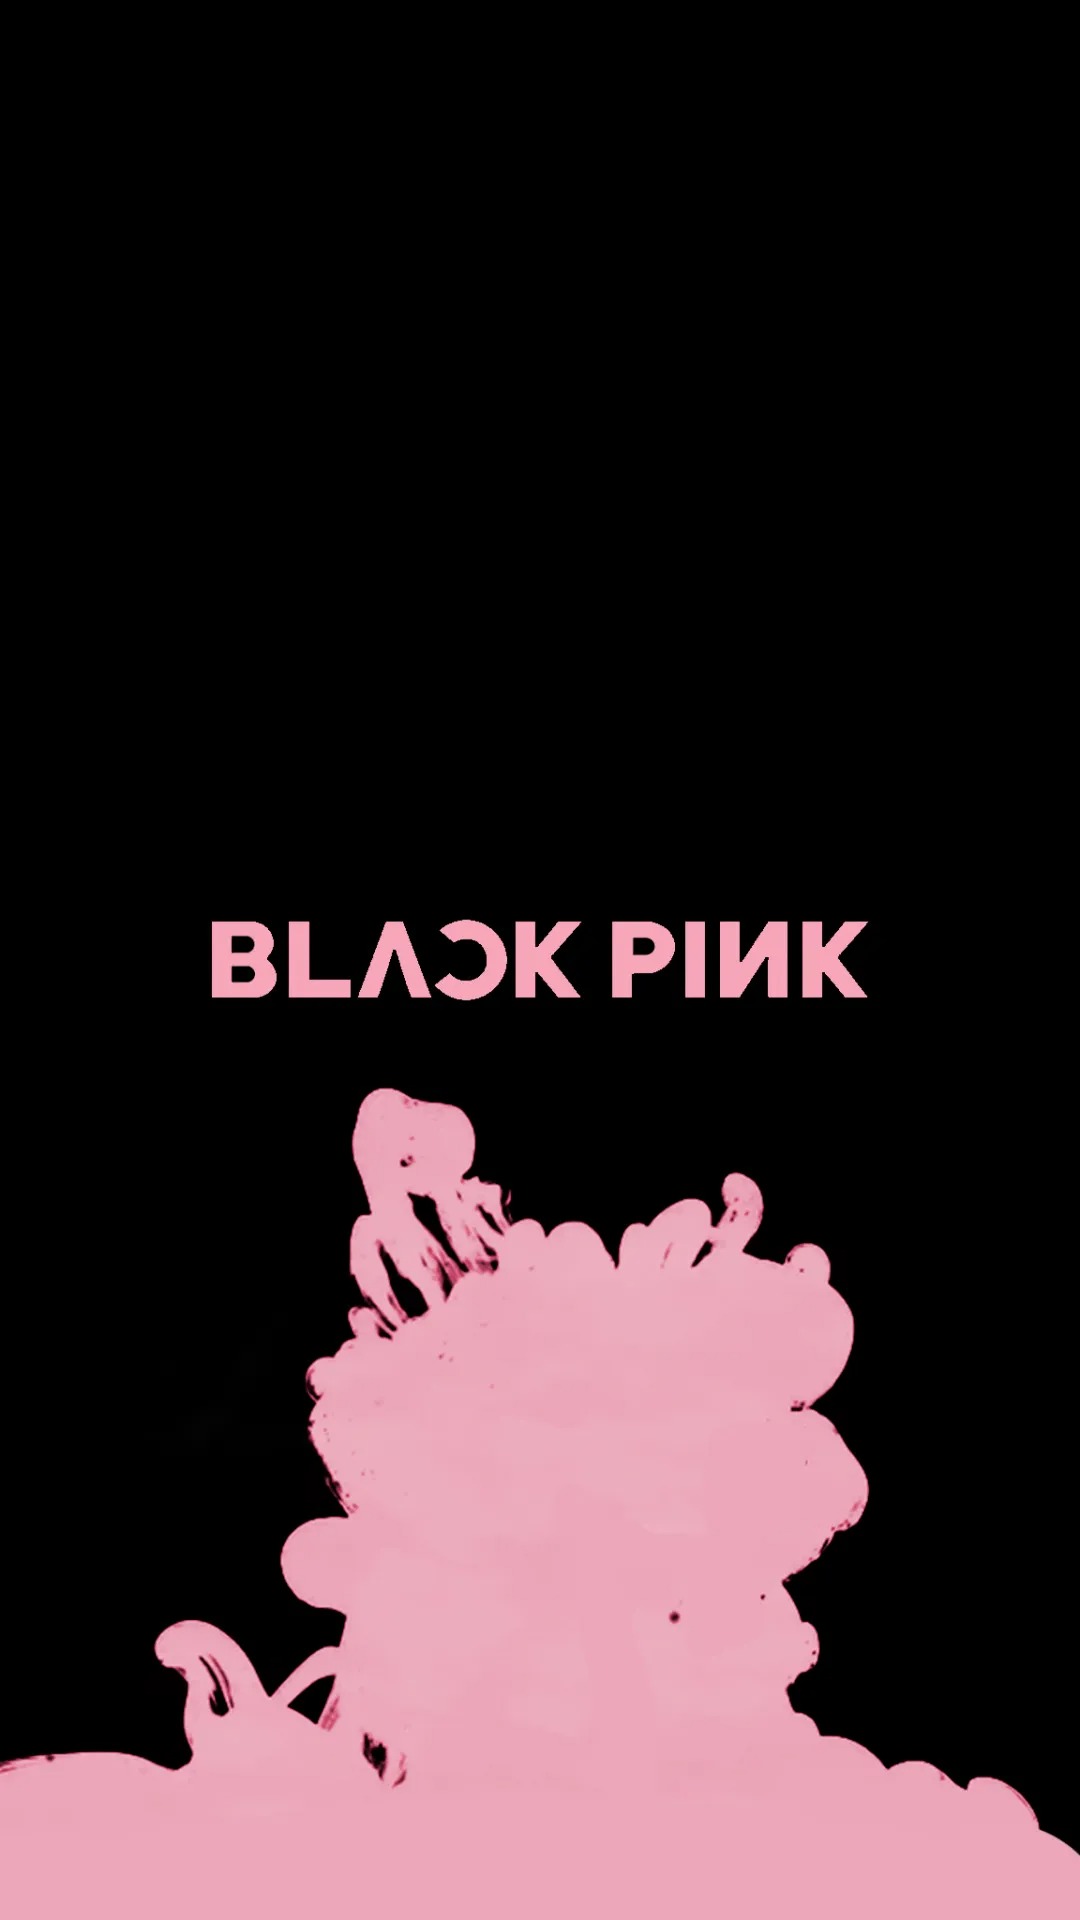 Blackpink logo abstract minimalist wallpapers